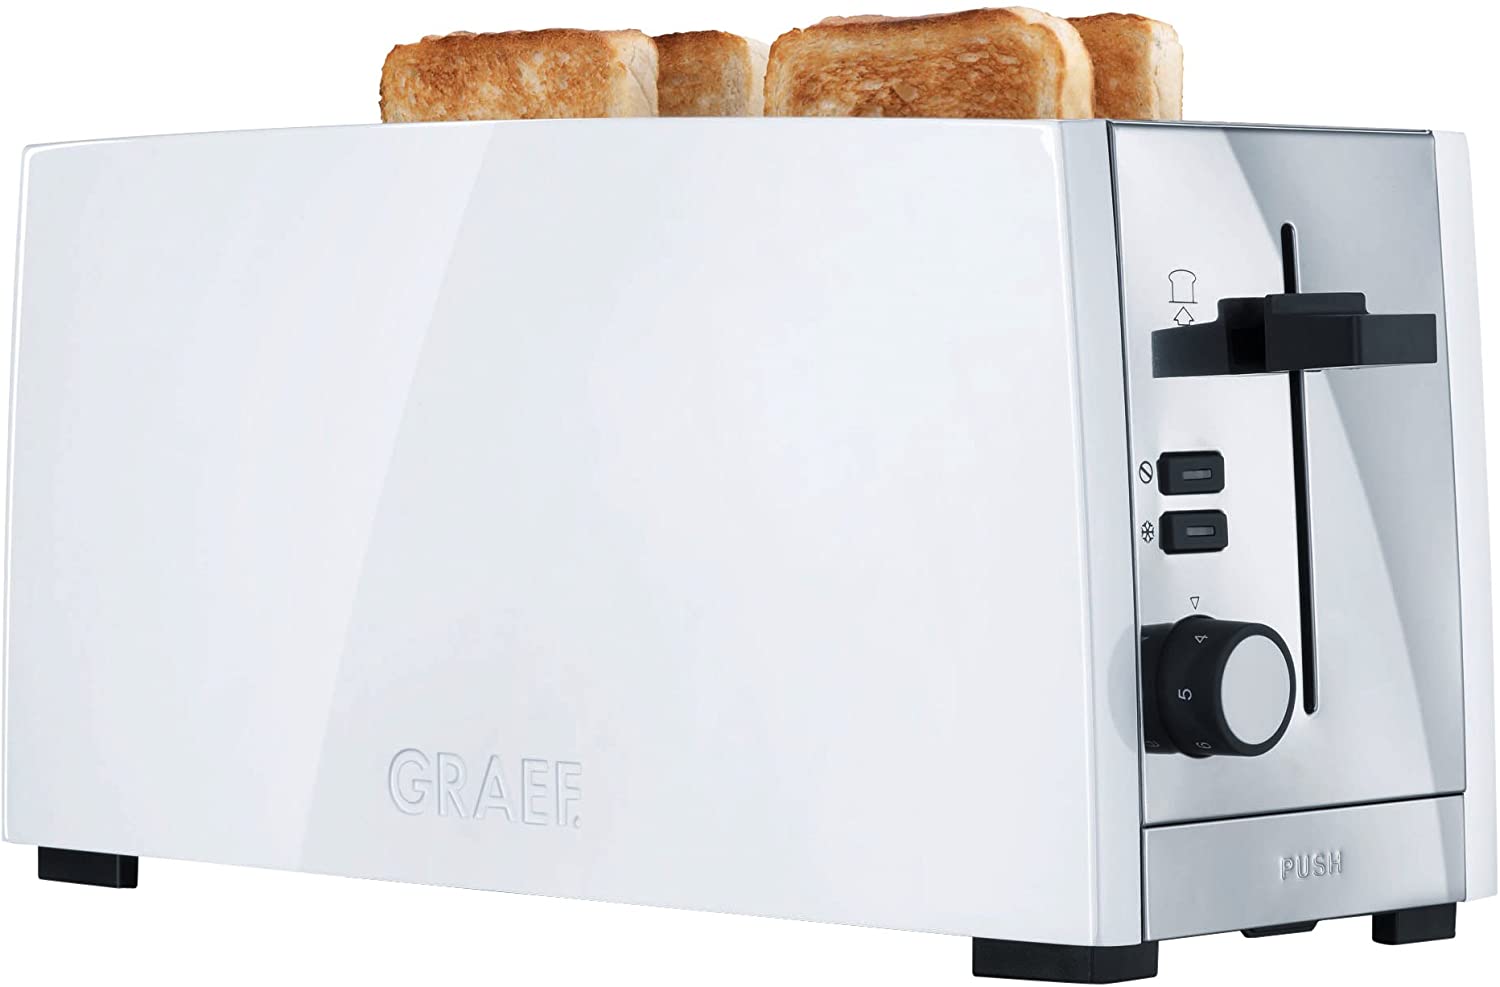 Graef White Polished Stainless Steel 4 Slice Long Slot Toaster